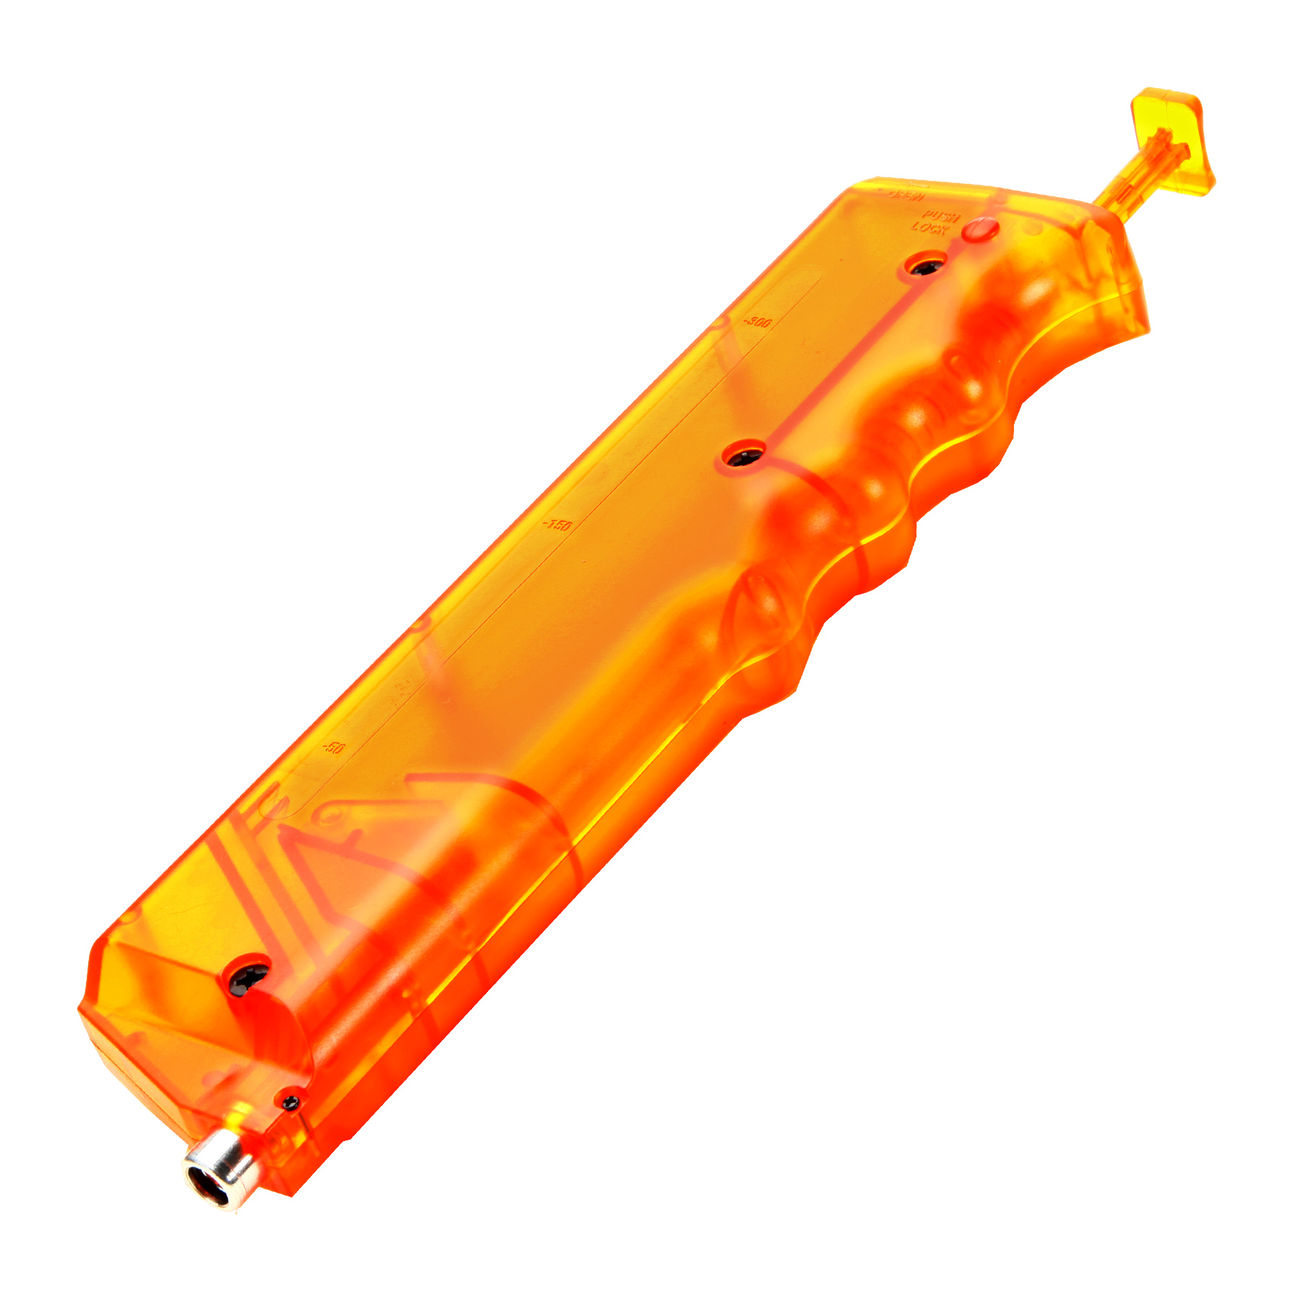 6mmProShop SMG Magazin Style Speedloader fr 350 BBs orange-transparent Bild 1